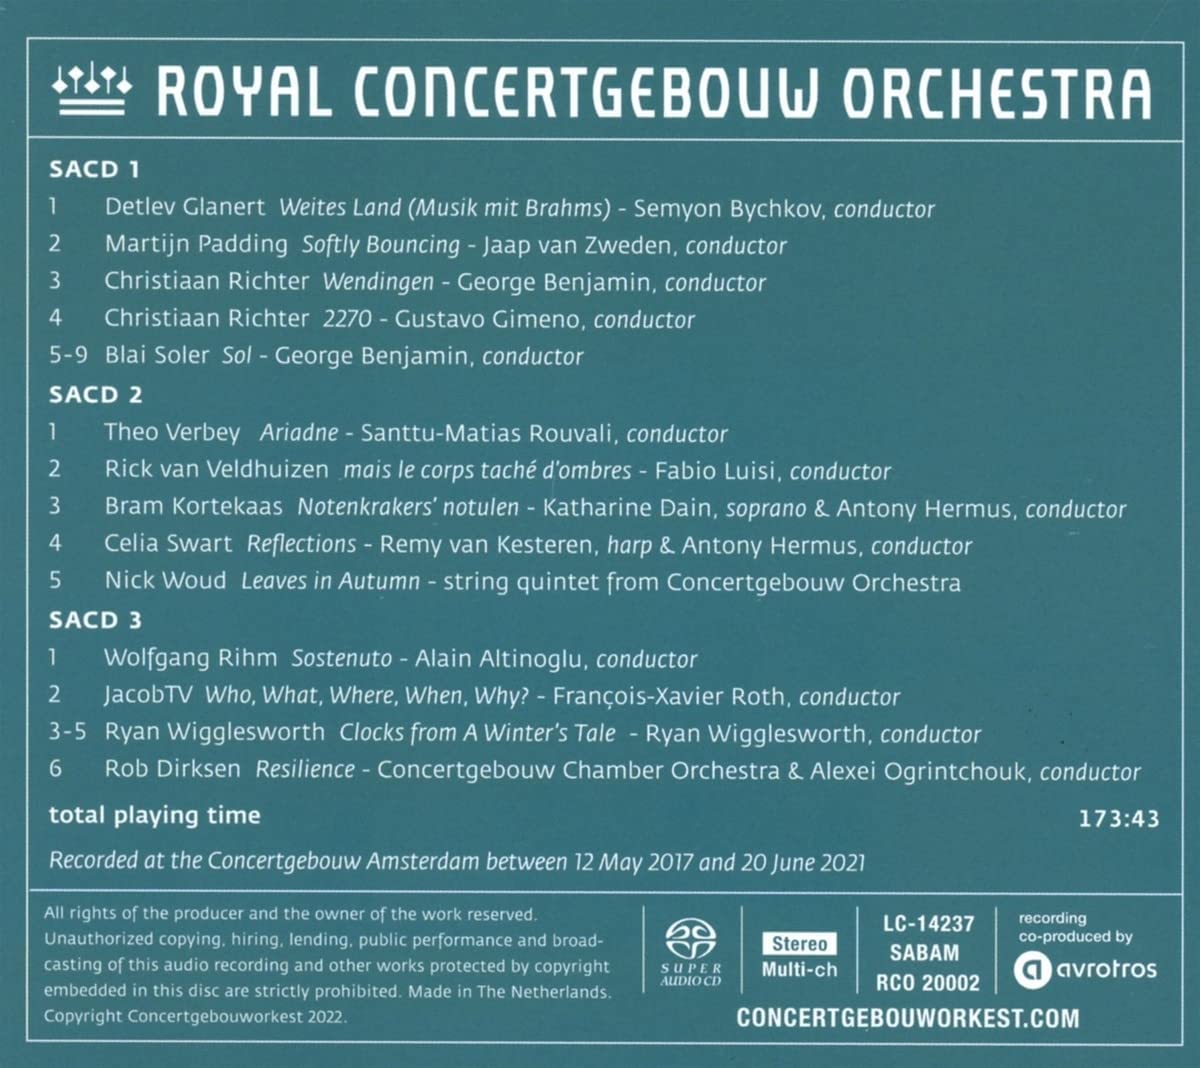 Royal Concertgebouw Orchestra 현대음악 연주집 (Horizon 10)